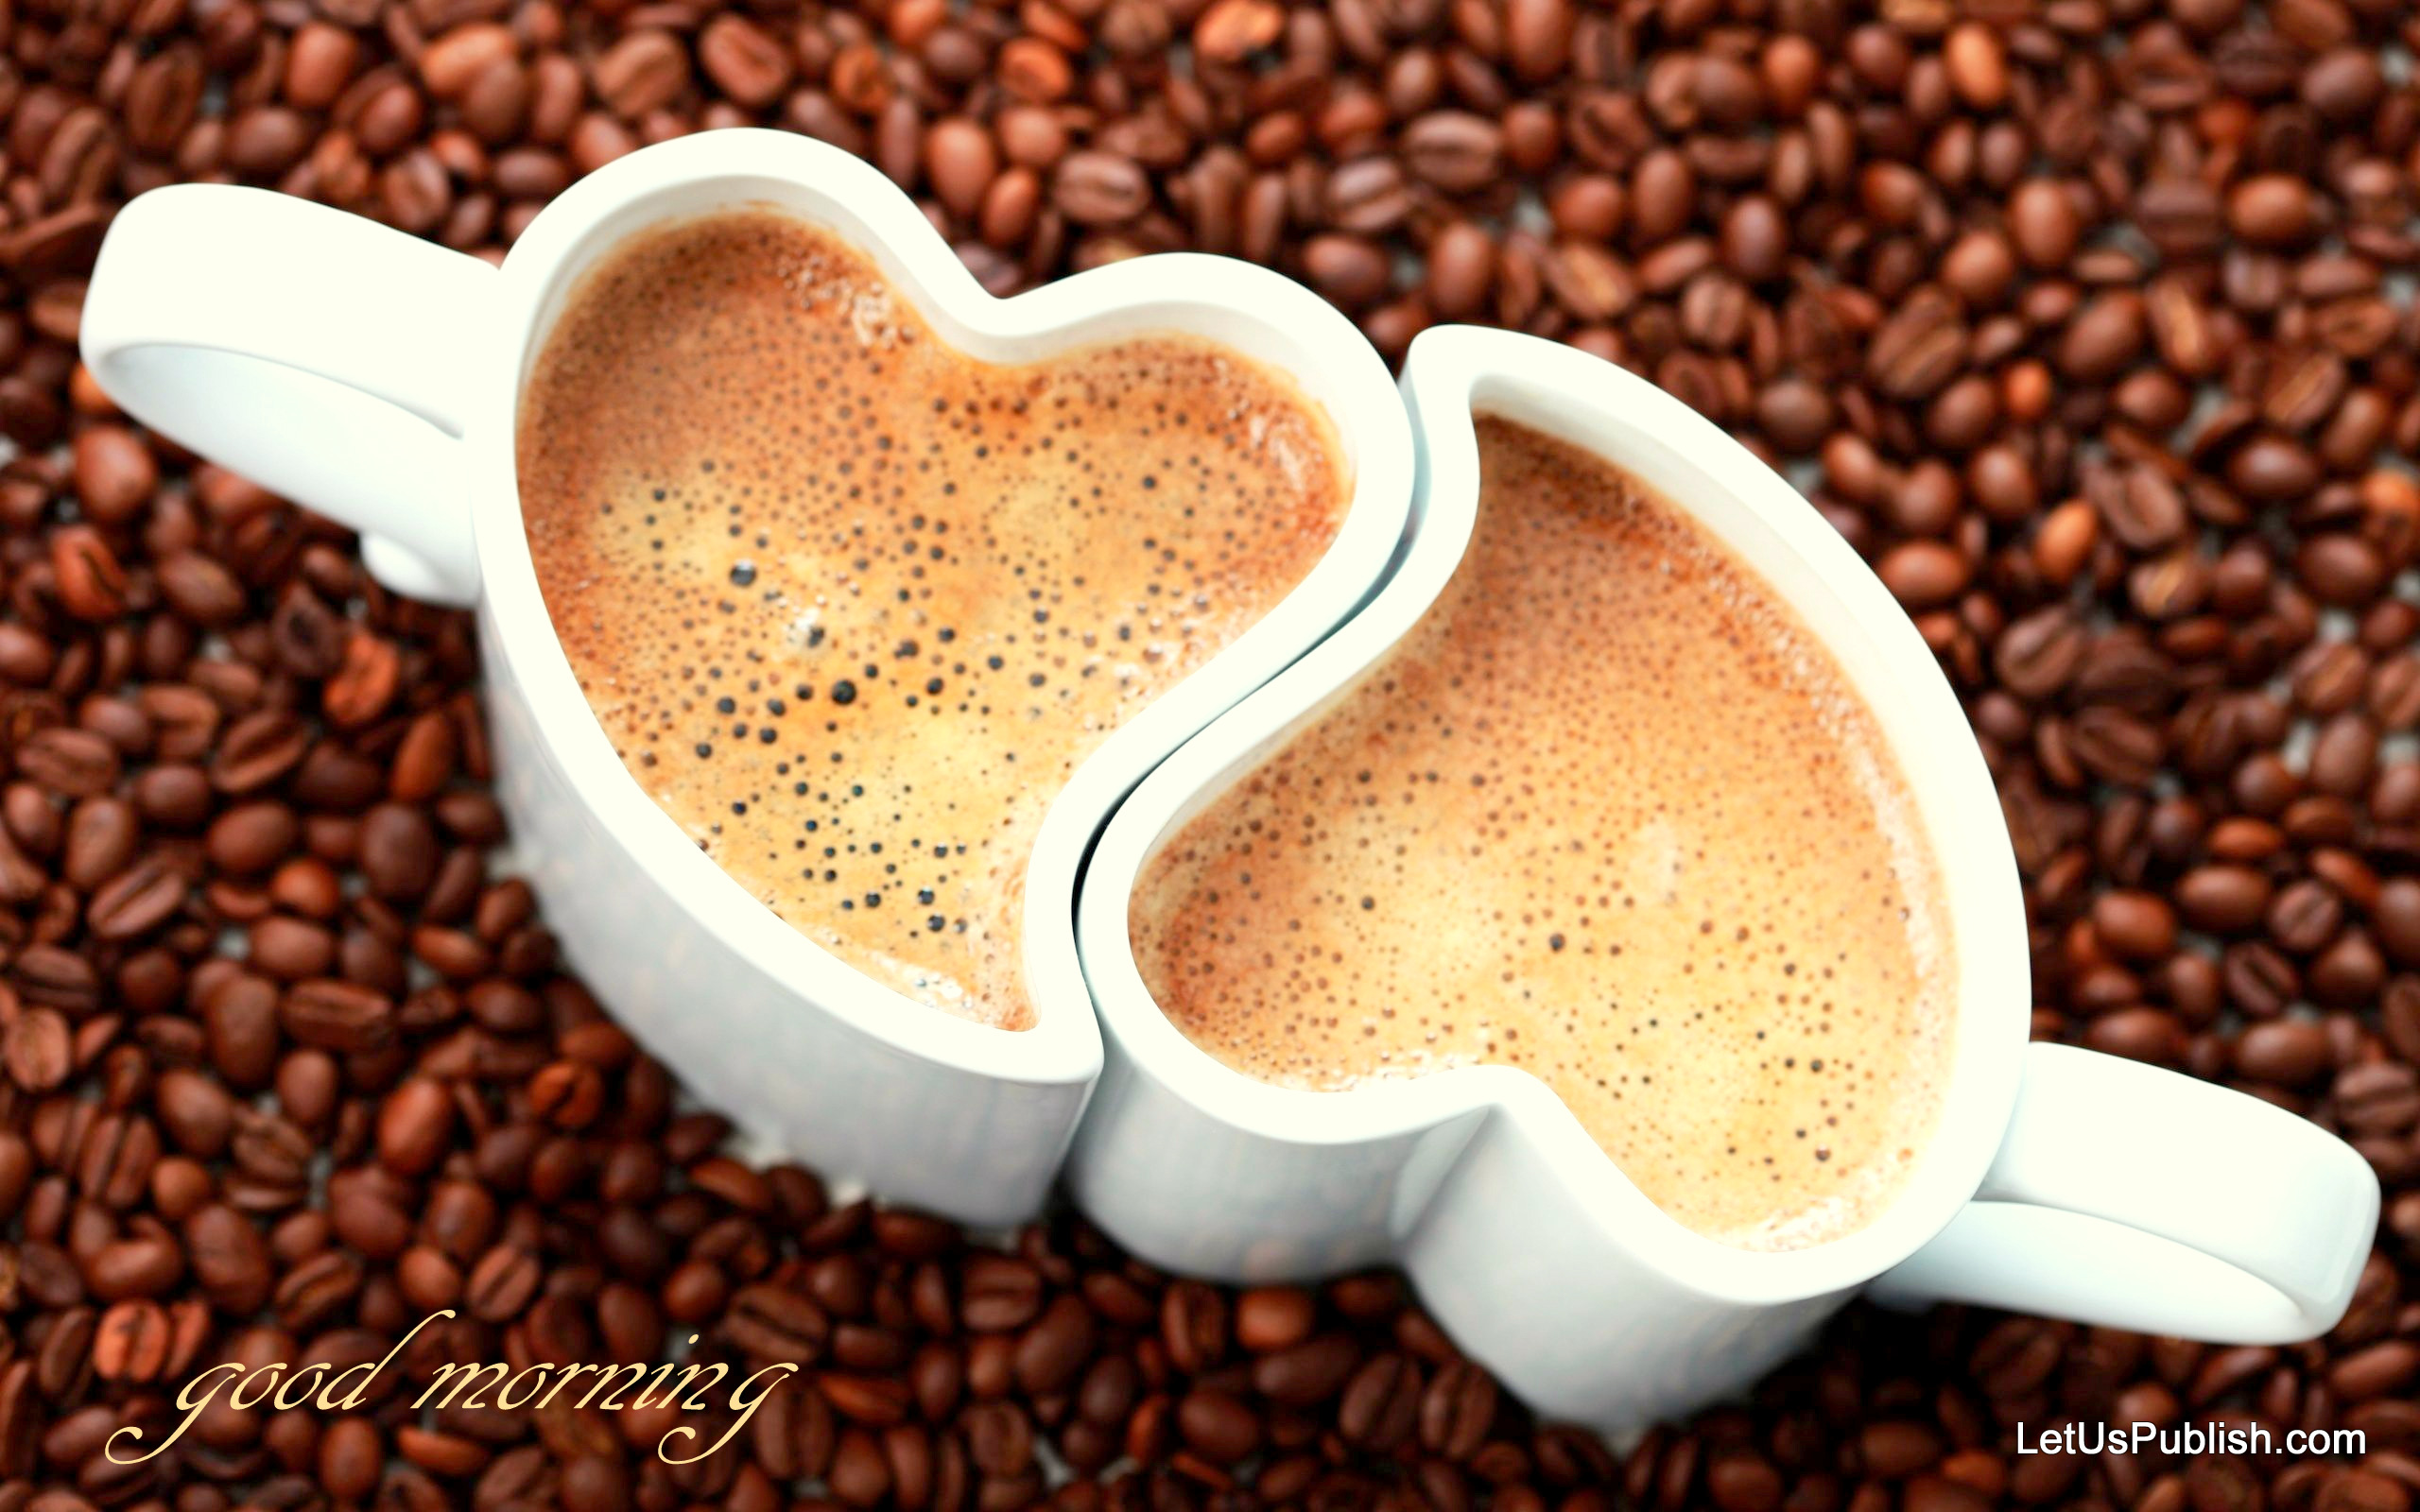 free good morning wallpaper,caffeine,cup,coffee cup,white coffee,java coffee